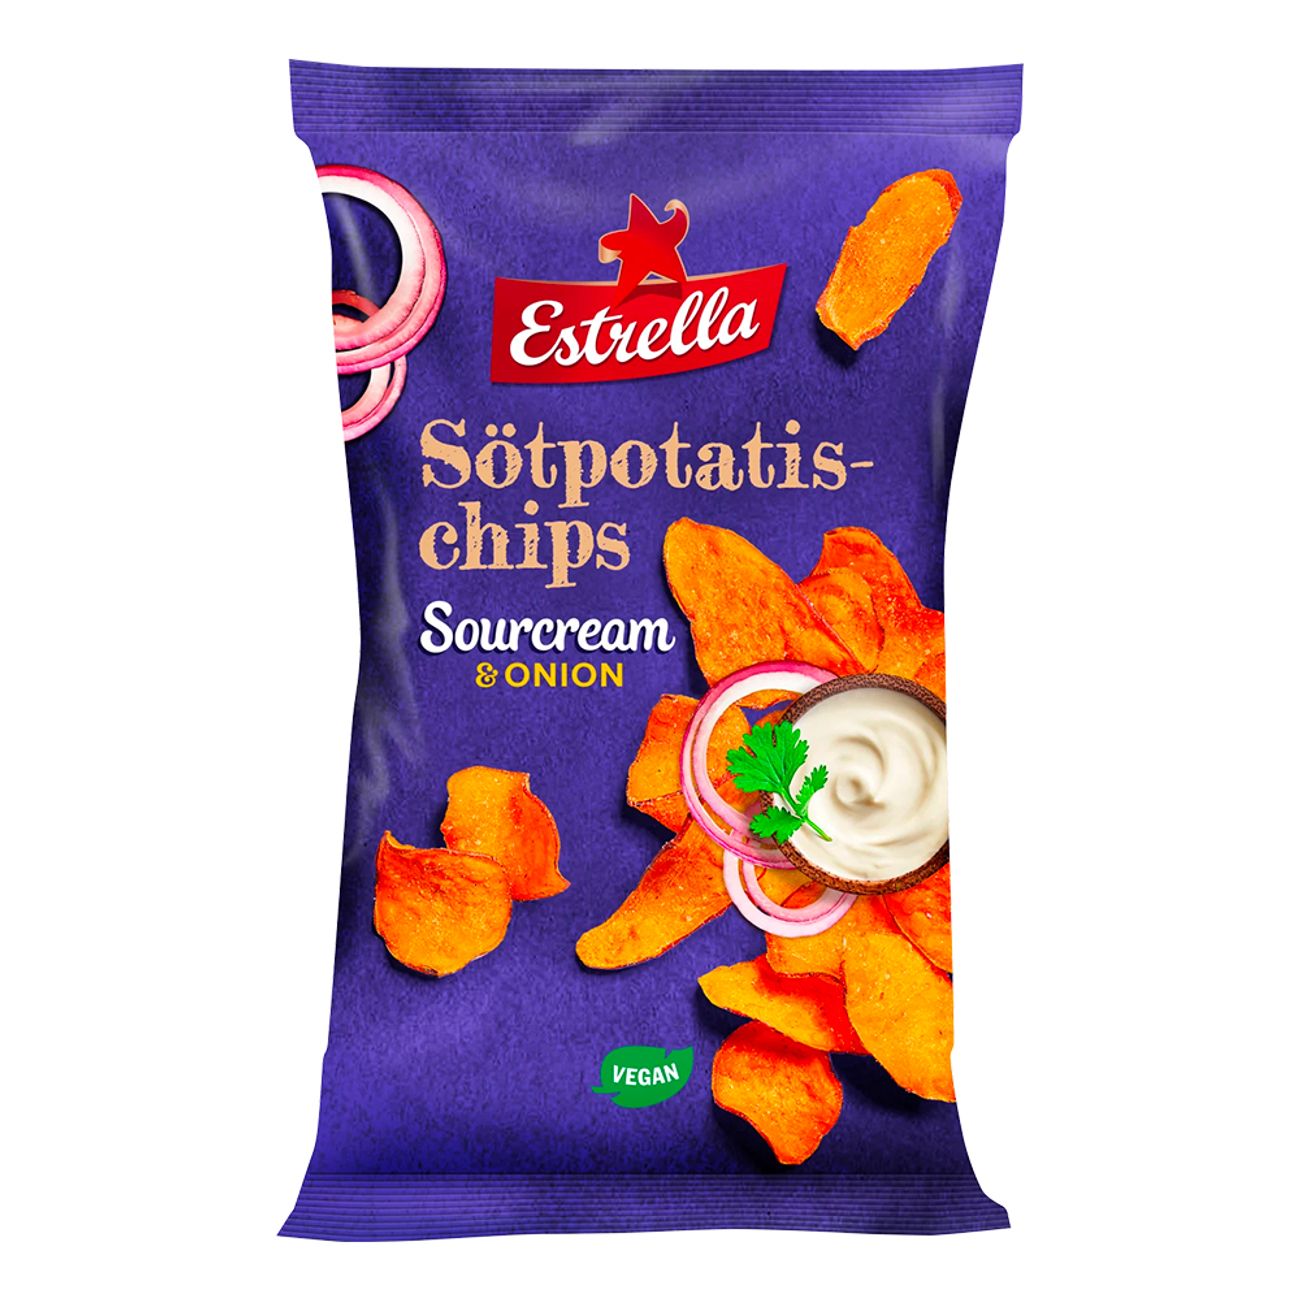 estrella-sotpotatischips-sourcream-onion-82517-1